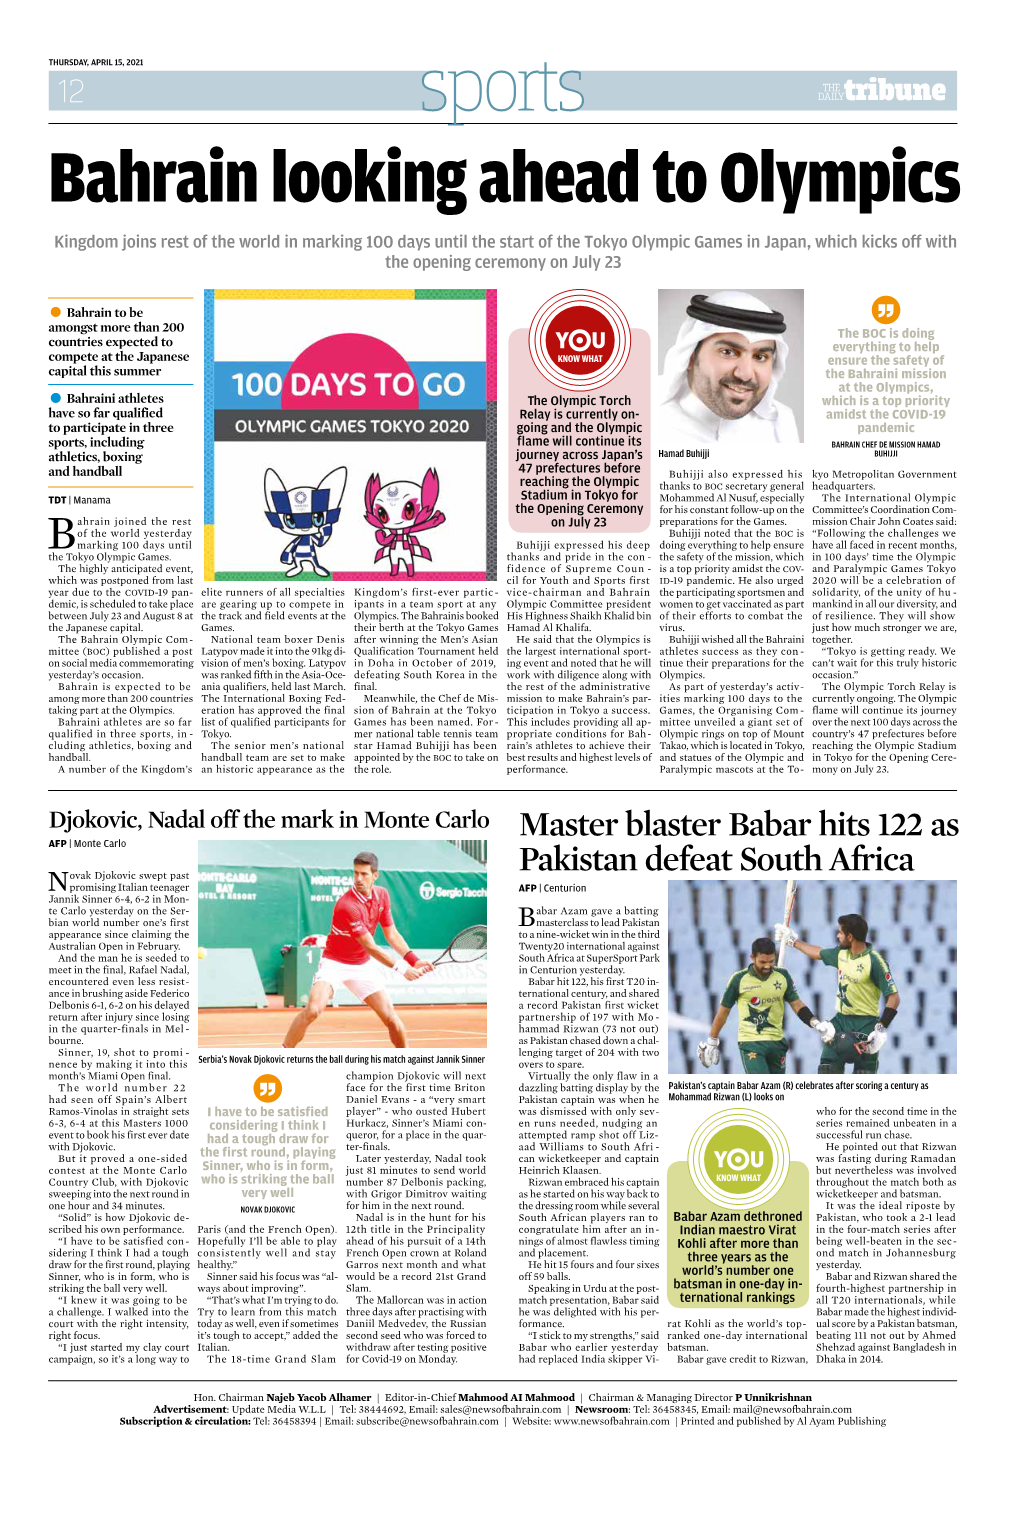 Bahrain Looking Ahead to Olympics